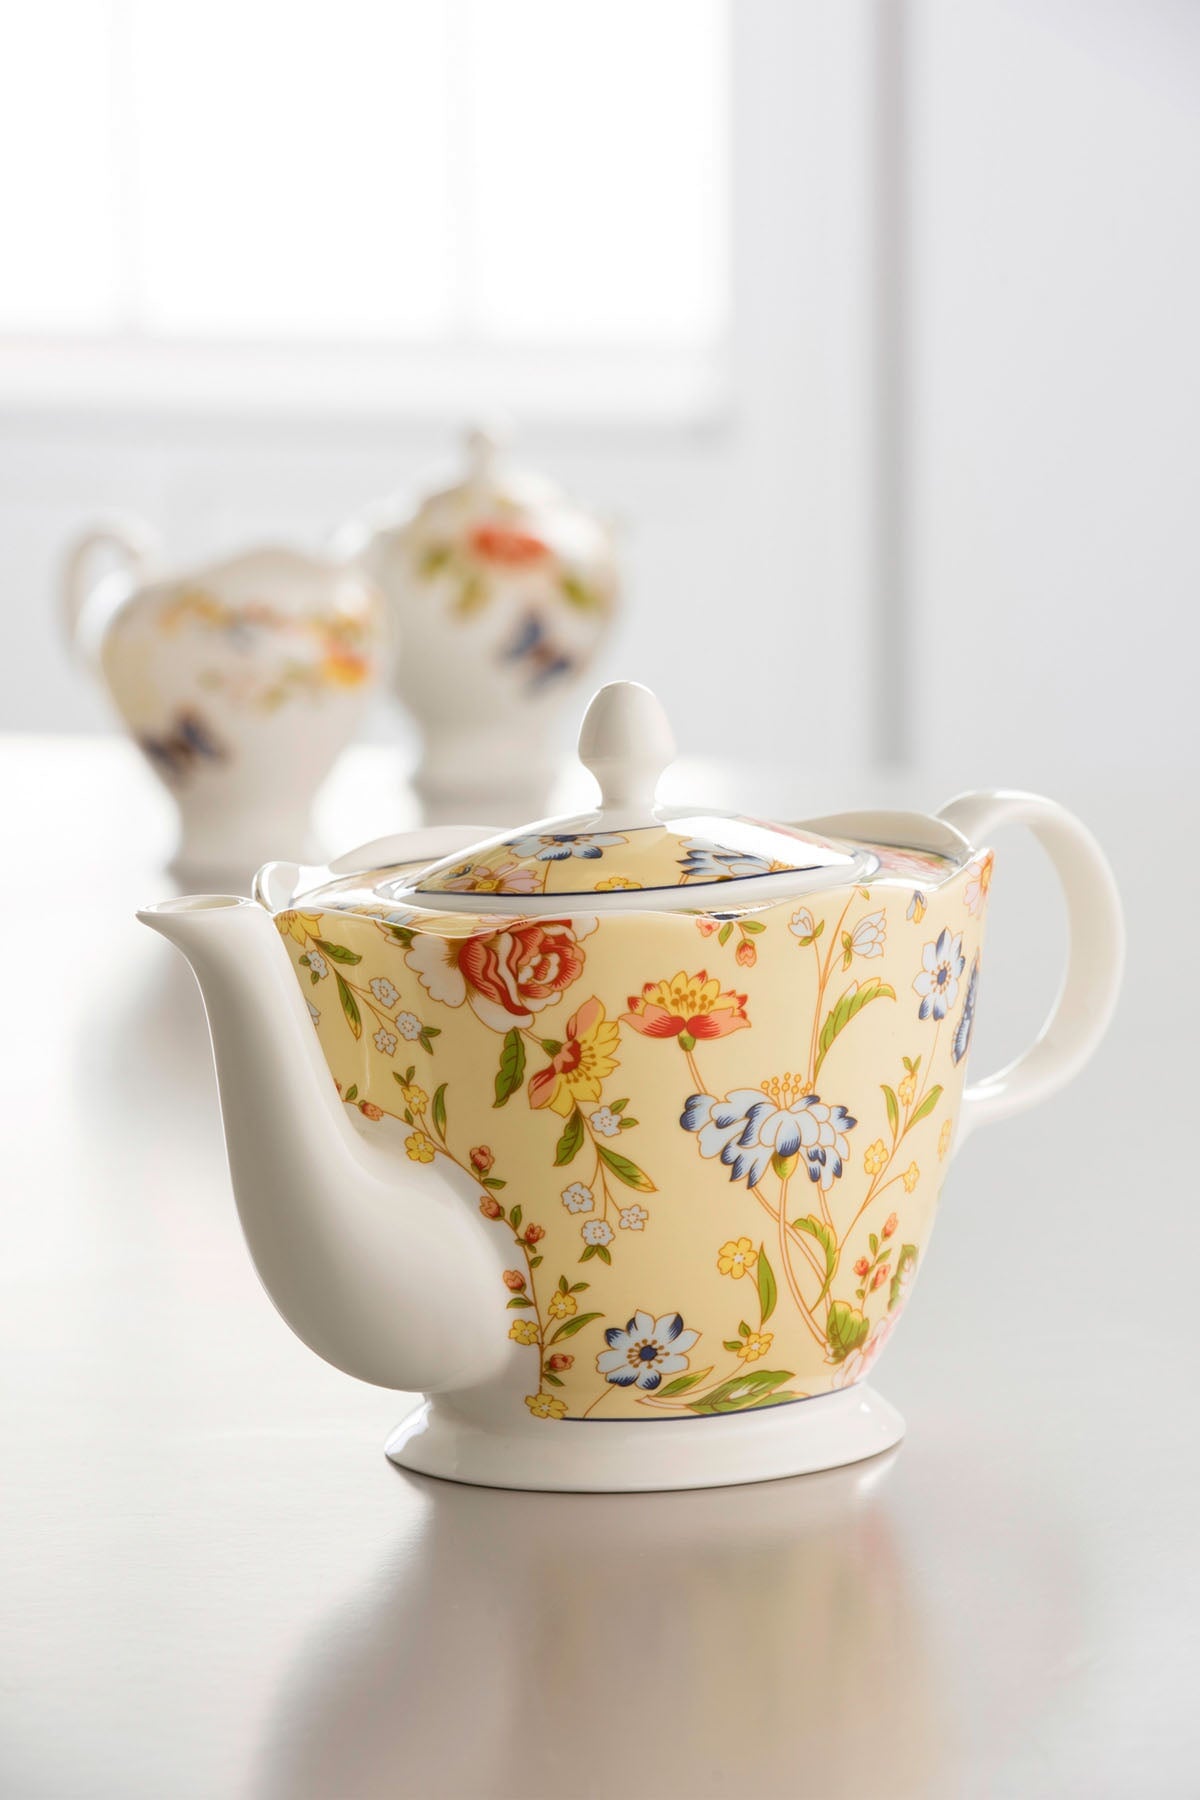 Carraig Donn Cottage Garden Teapot